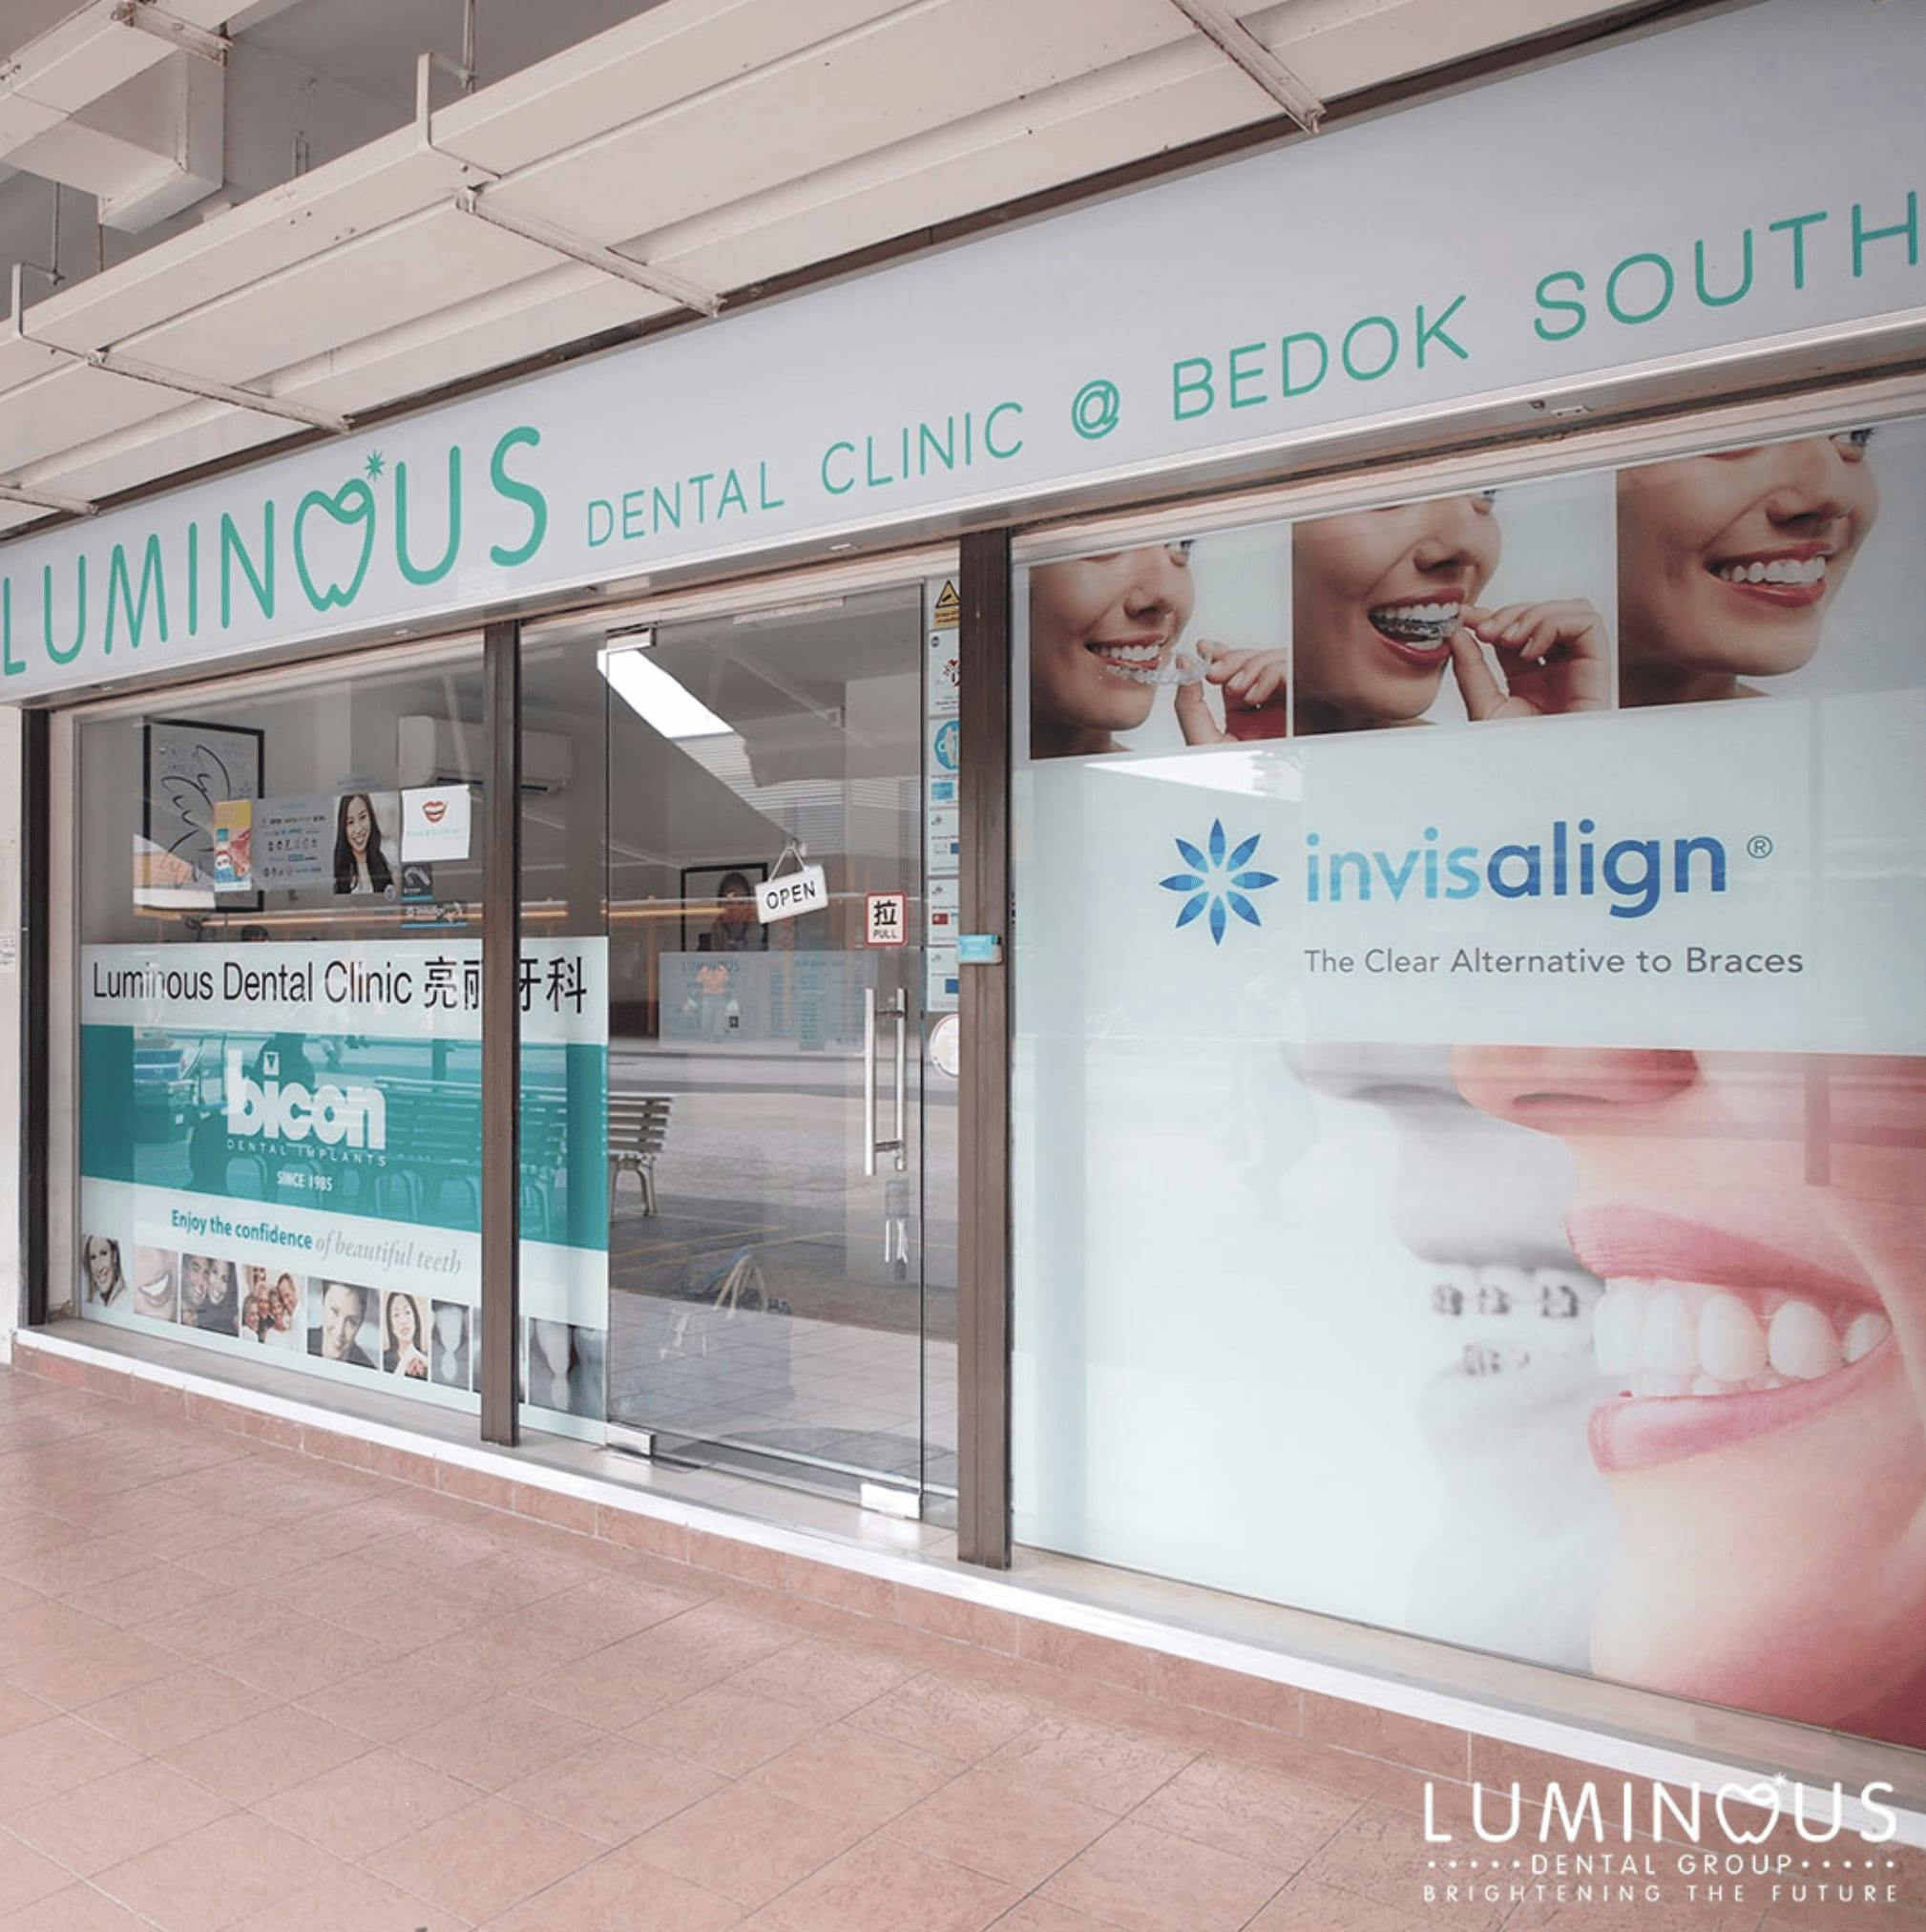 Luminous Dental Clinic @ Bedok South